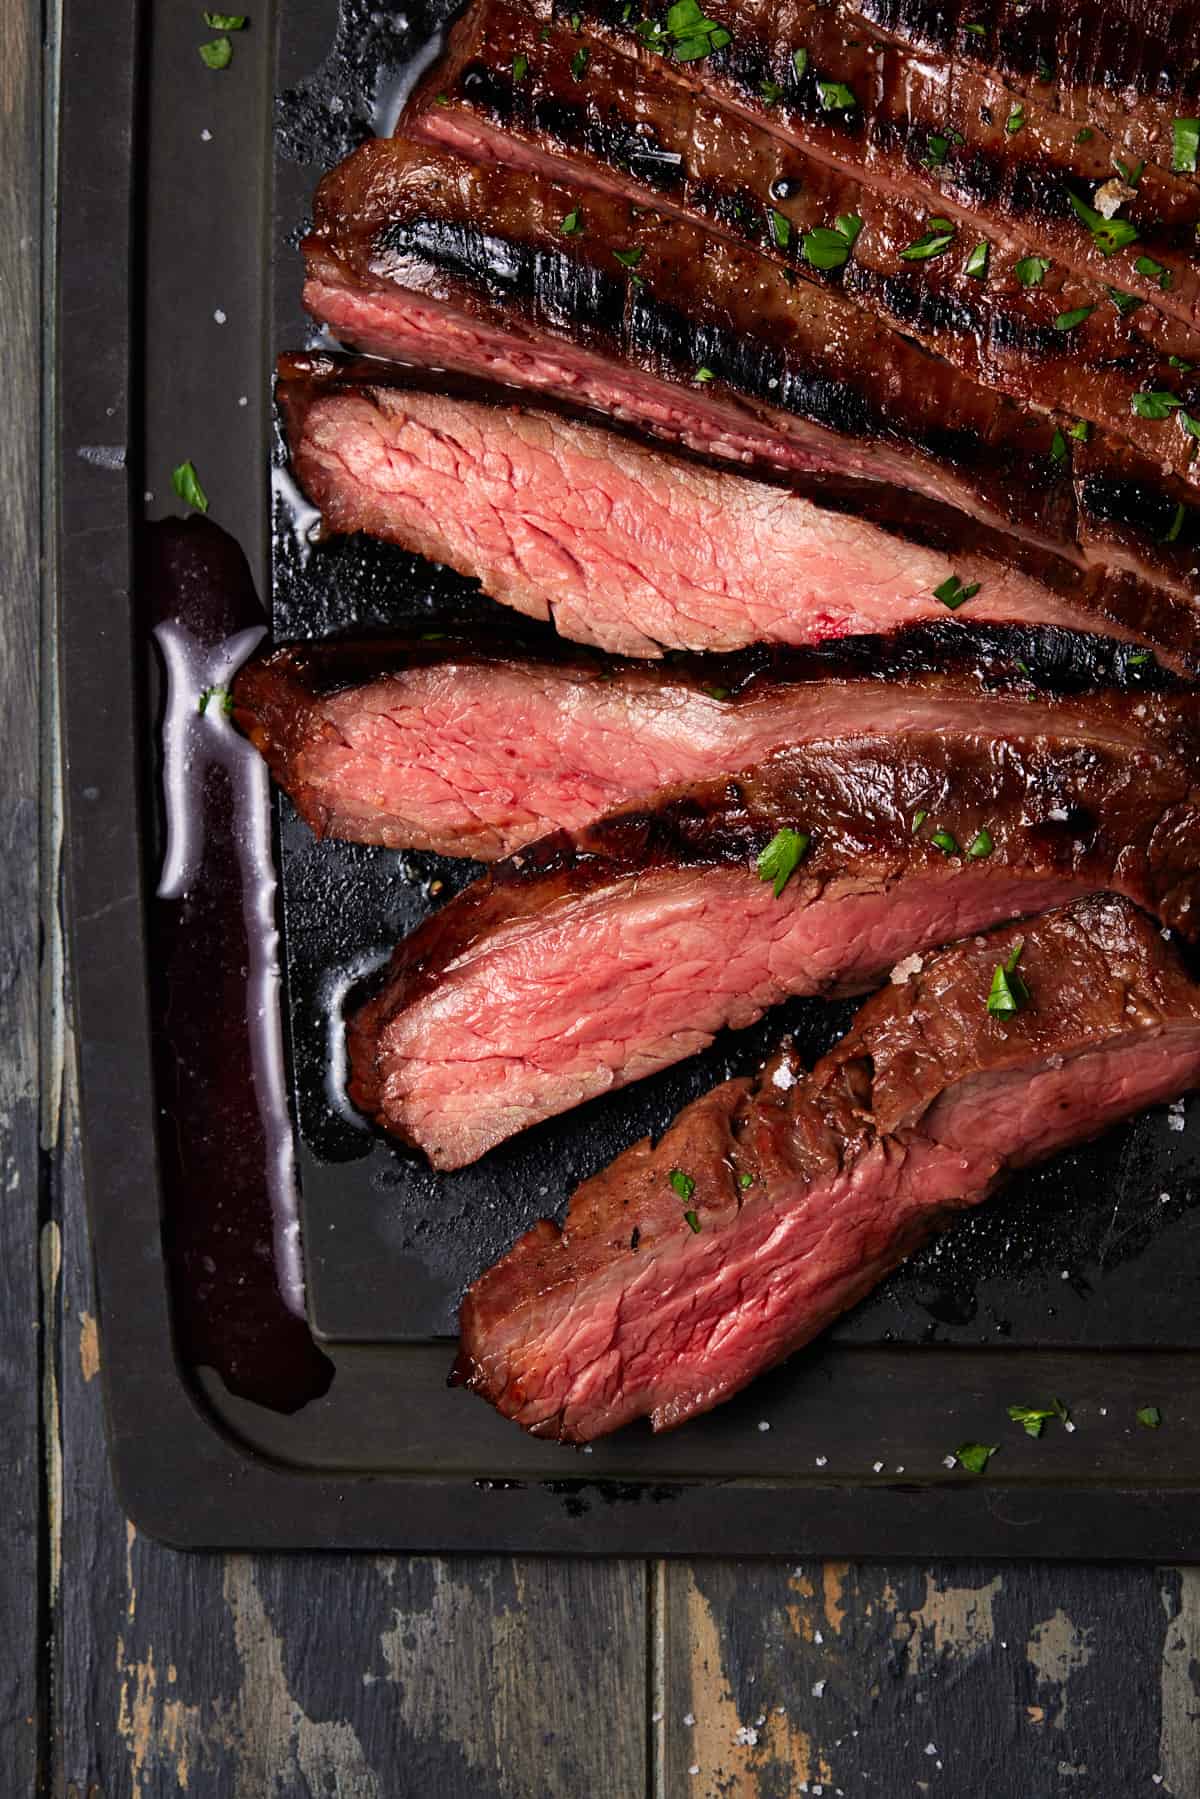 Sliced medium rare flank steak on board.